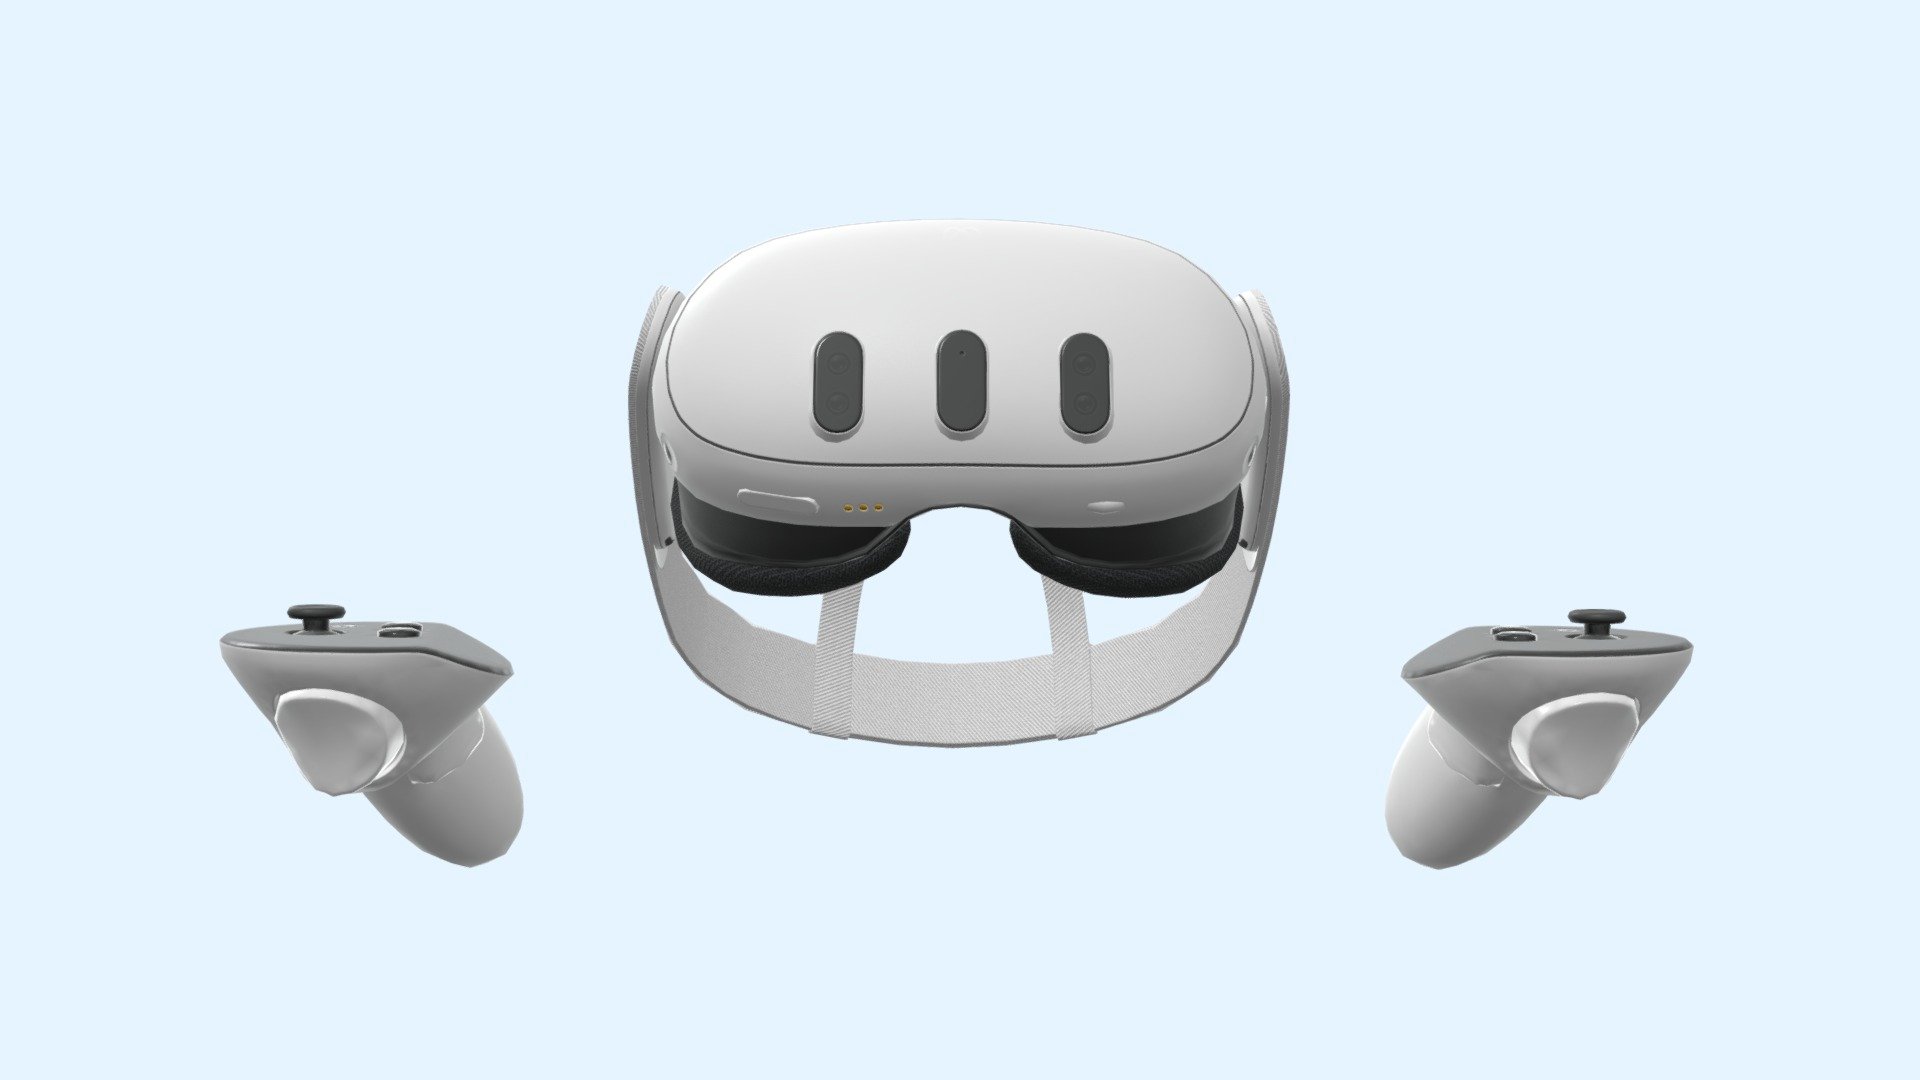 PULSE 3D Wireless Headset PS5 - Buy Royalty Free 3D model by Frezzy  (@frezzy3d) [90599a5]